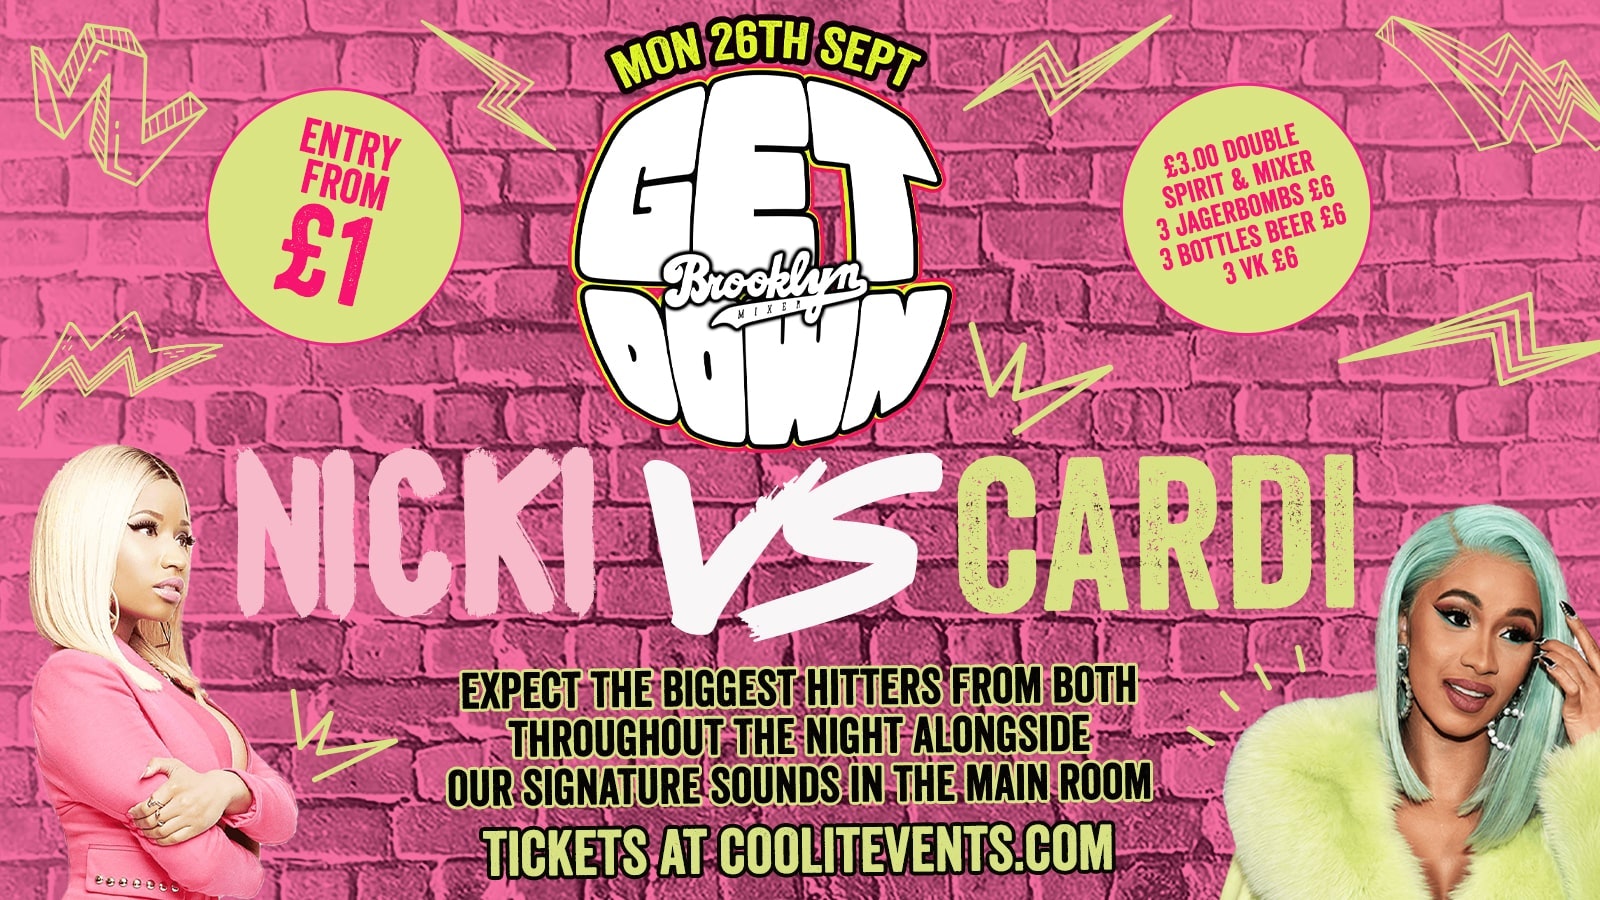 Get Down Mondays : Nicki Vs Cardi